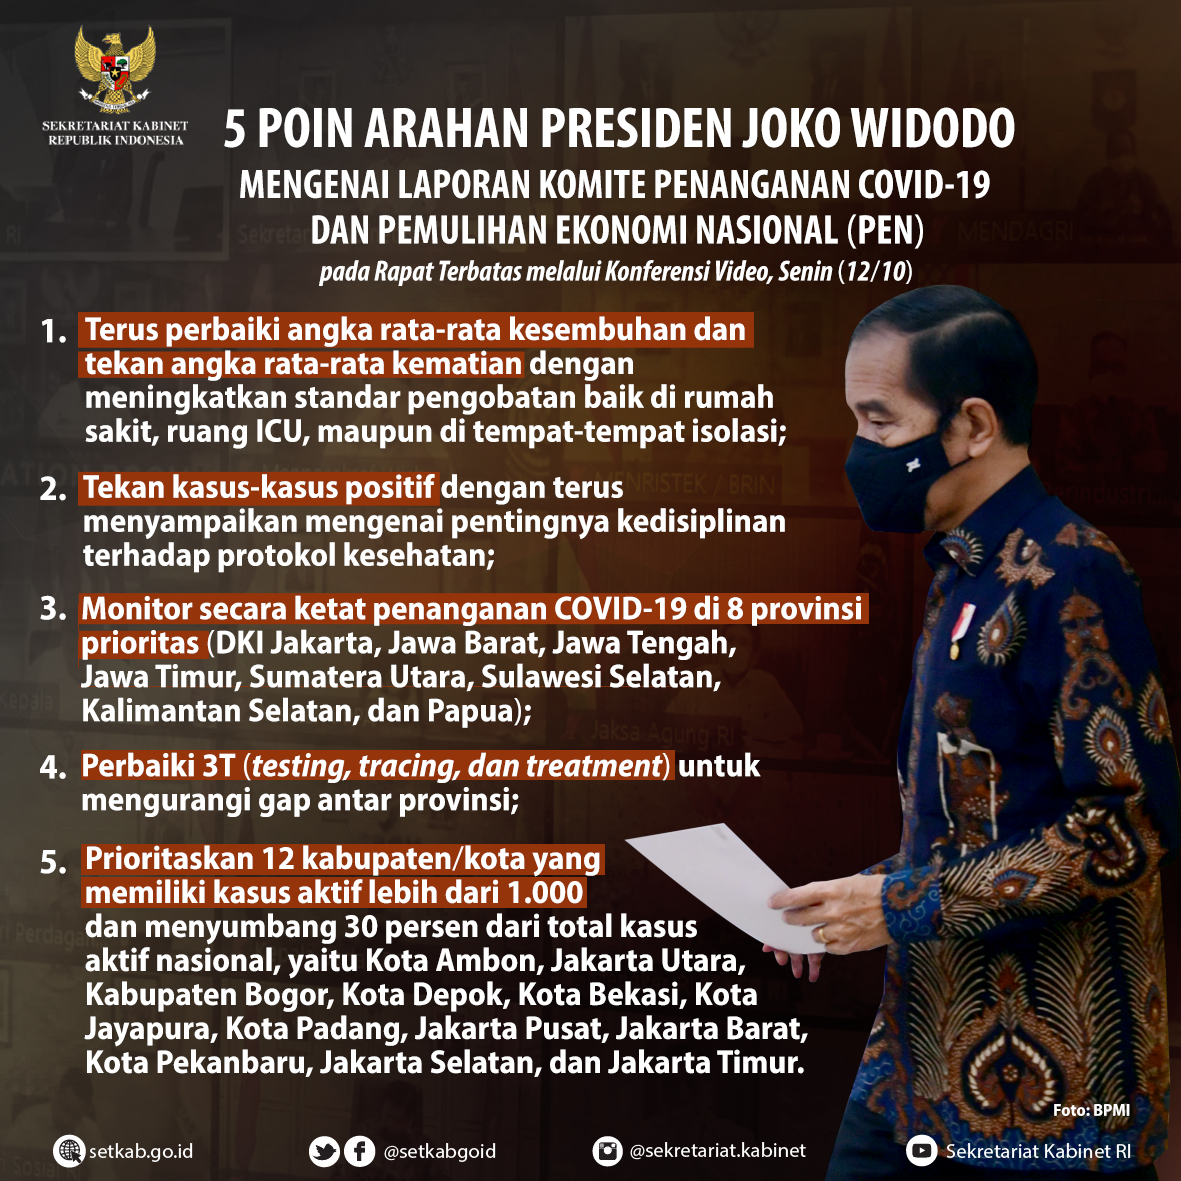 Arahan Presiden Joko Widodo pada Rapat Terbatas mengenai Laporan Komite Penanganan Covid-19 dan Pemulihan Ekonomi Nasional, Senin (12/10)